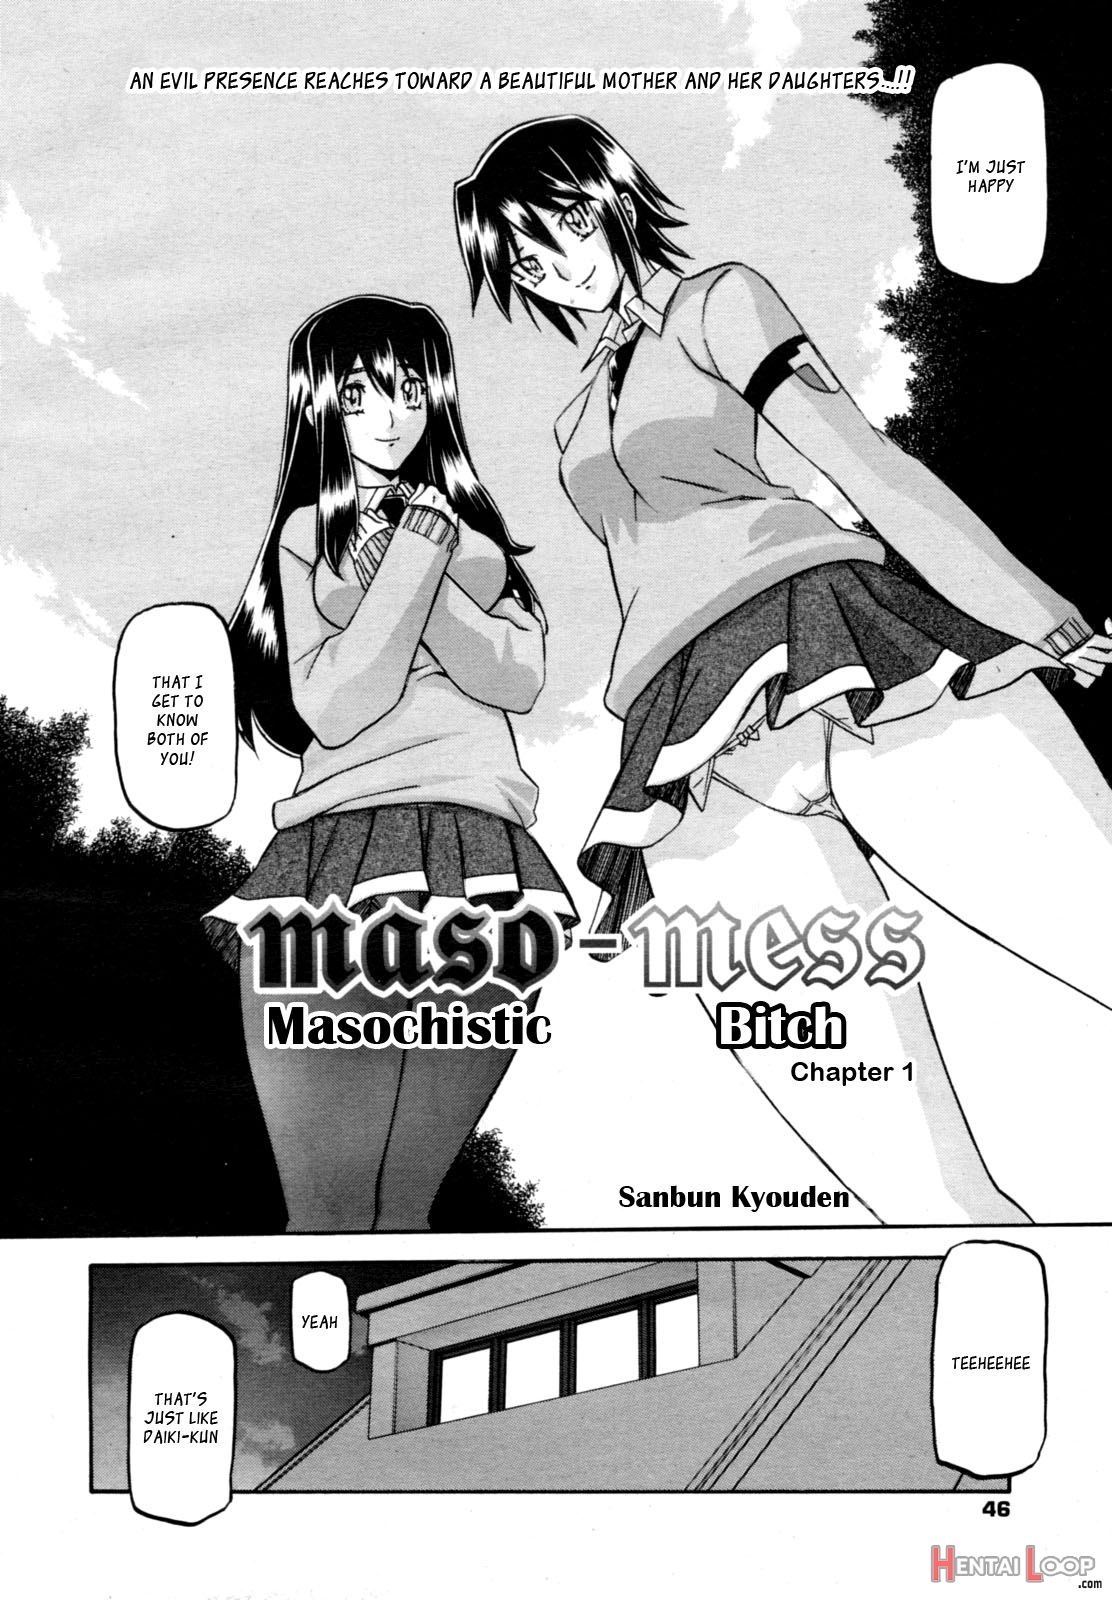 Maso-mess page 4